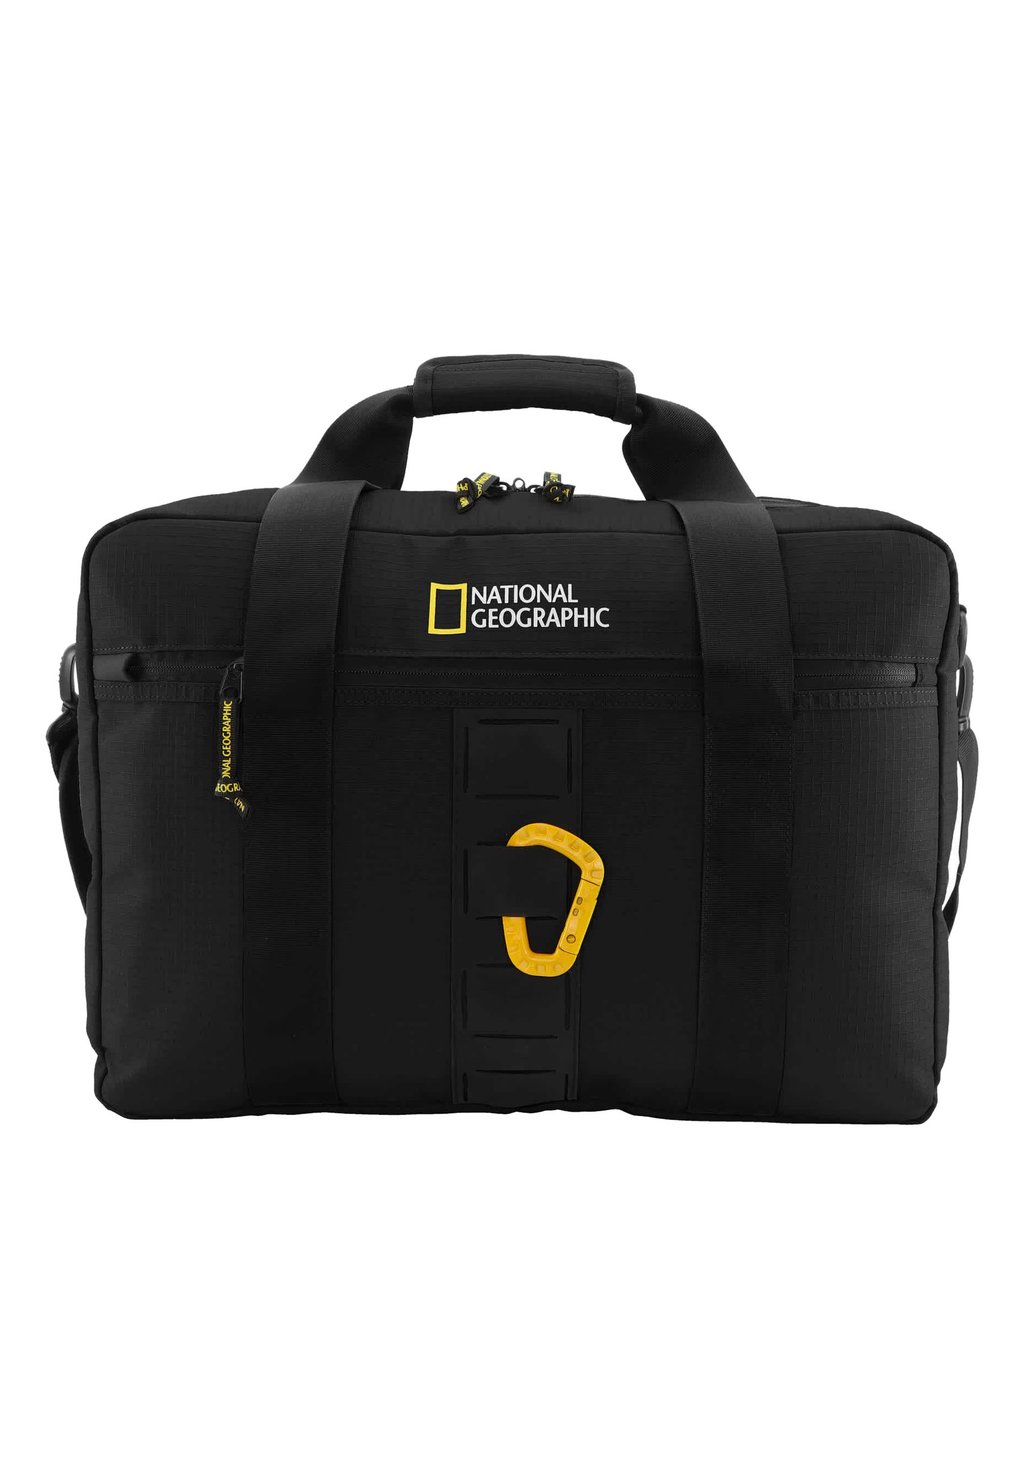 Дорожная сумка EXPLORER National Geographic, цвет black